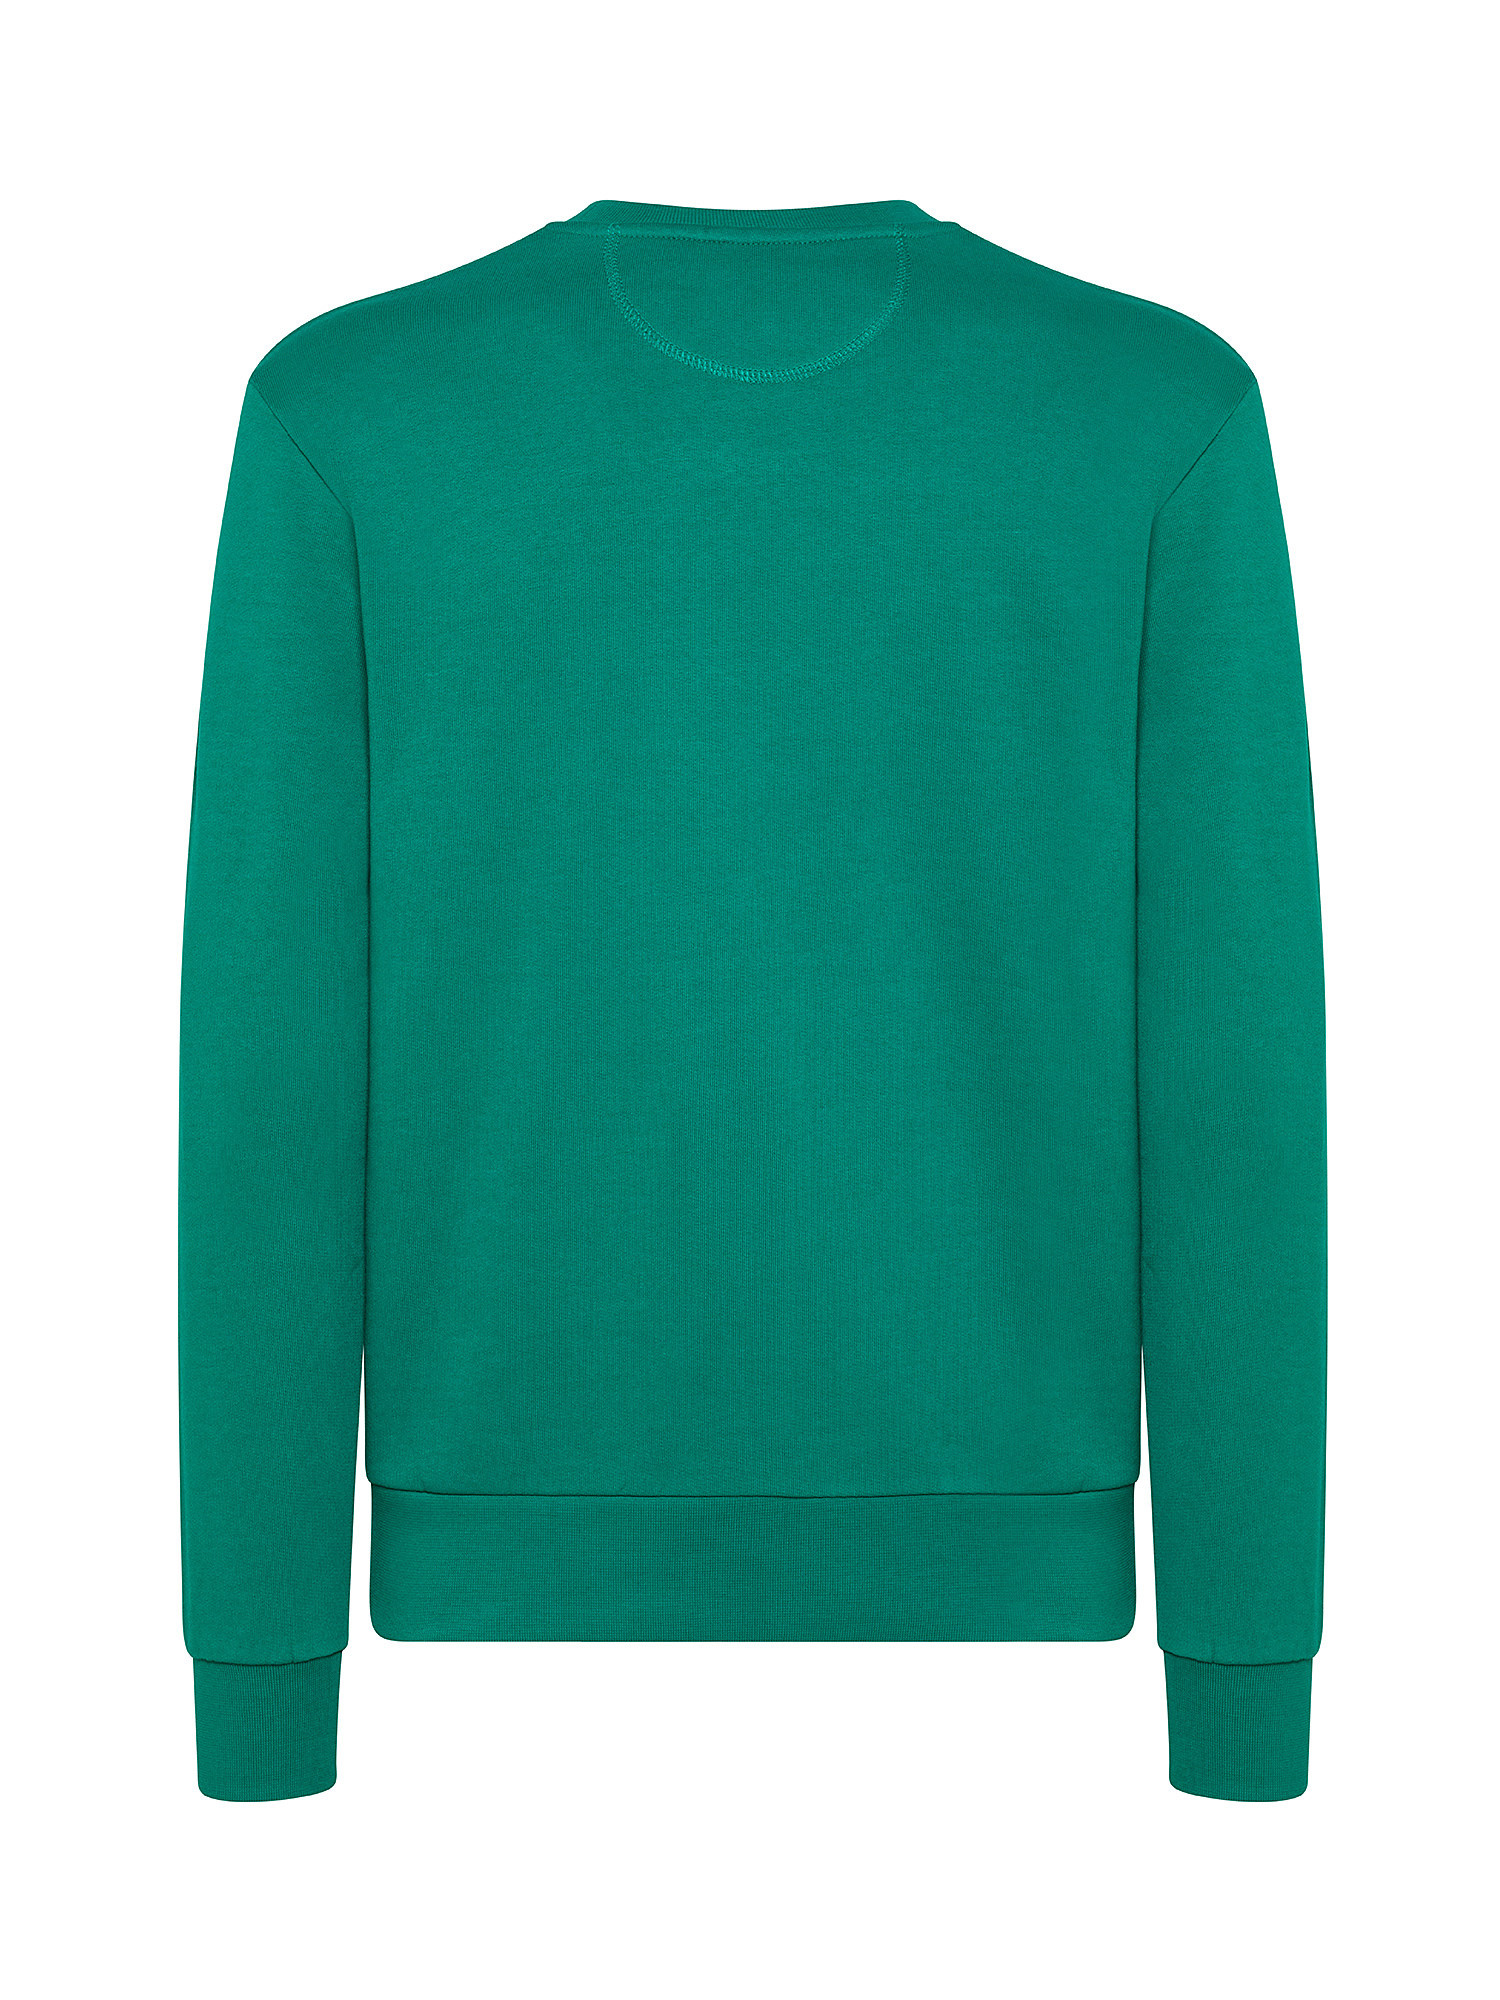 Men's regular-fit crew-neck cotton sweatshirt, Green, large image number 1